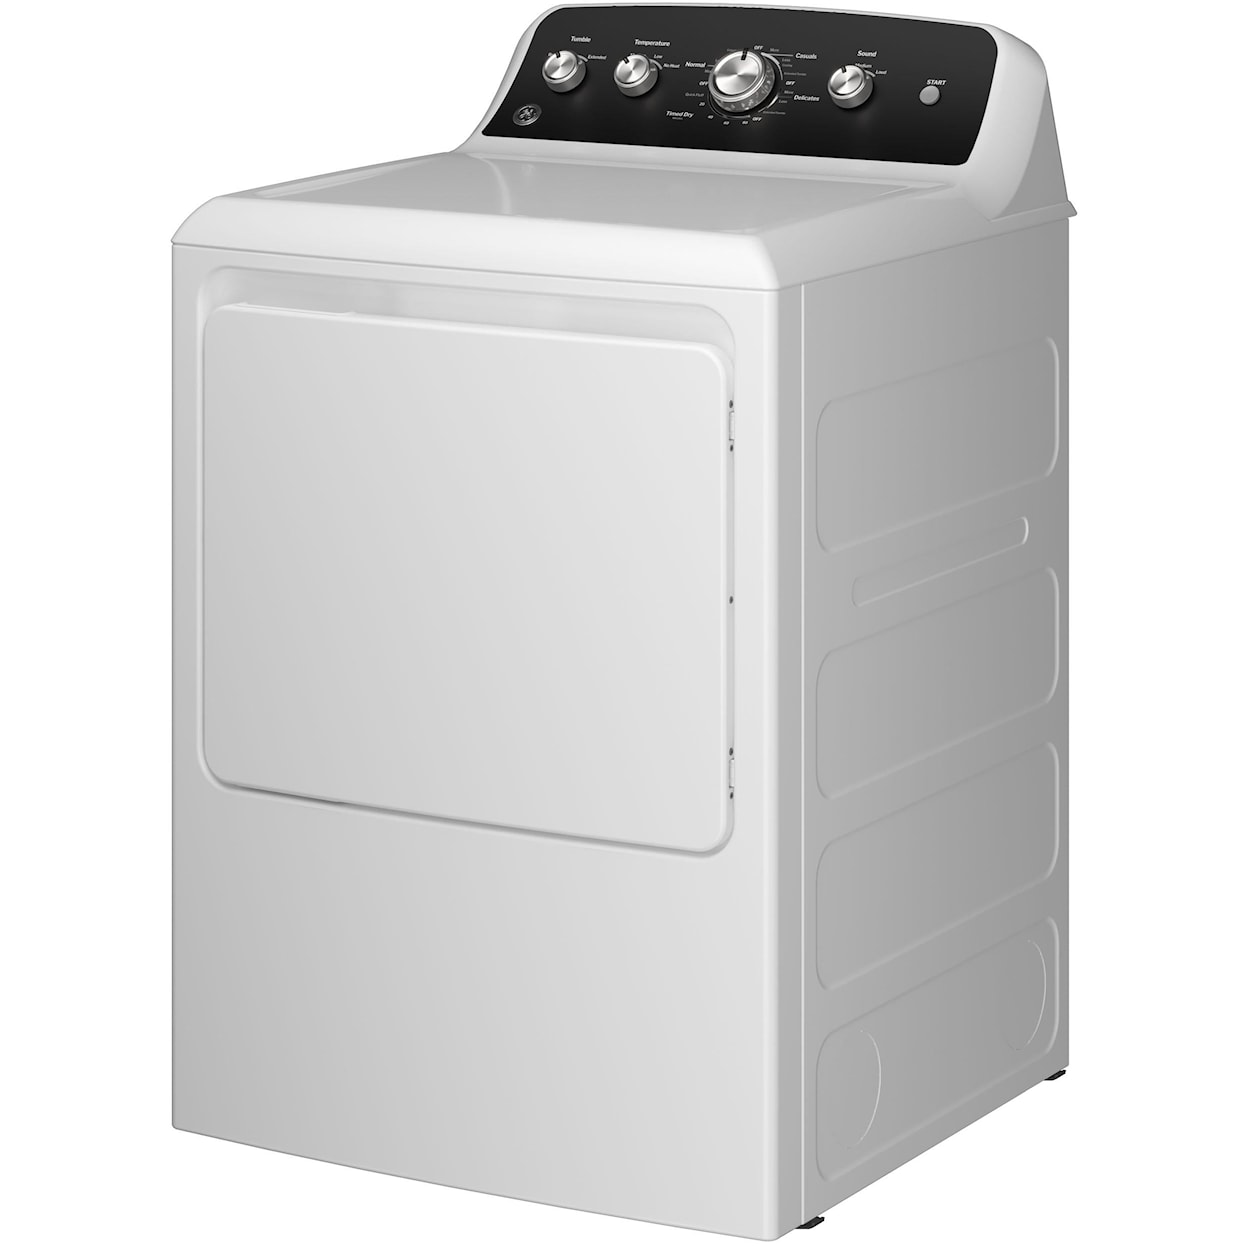 GE Appliances Electric Dryers - GE Dryer